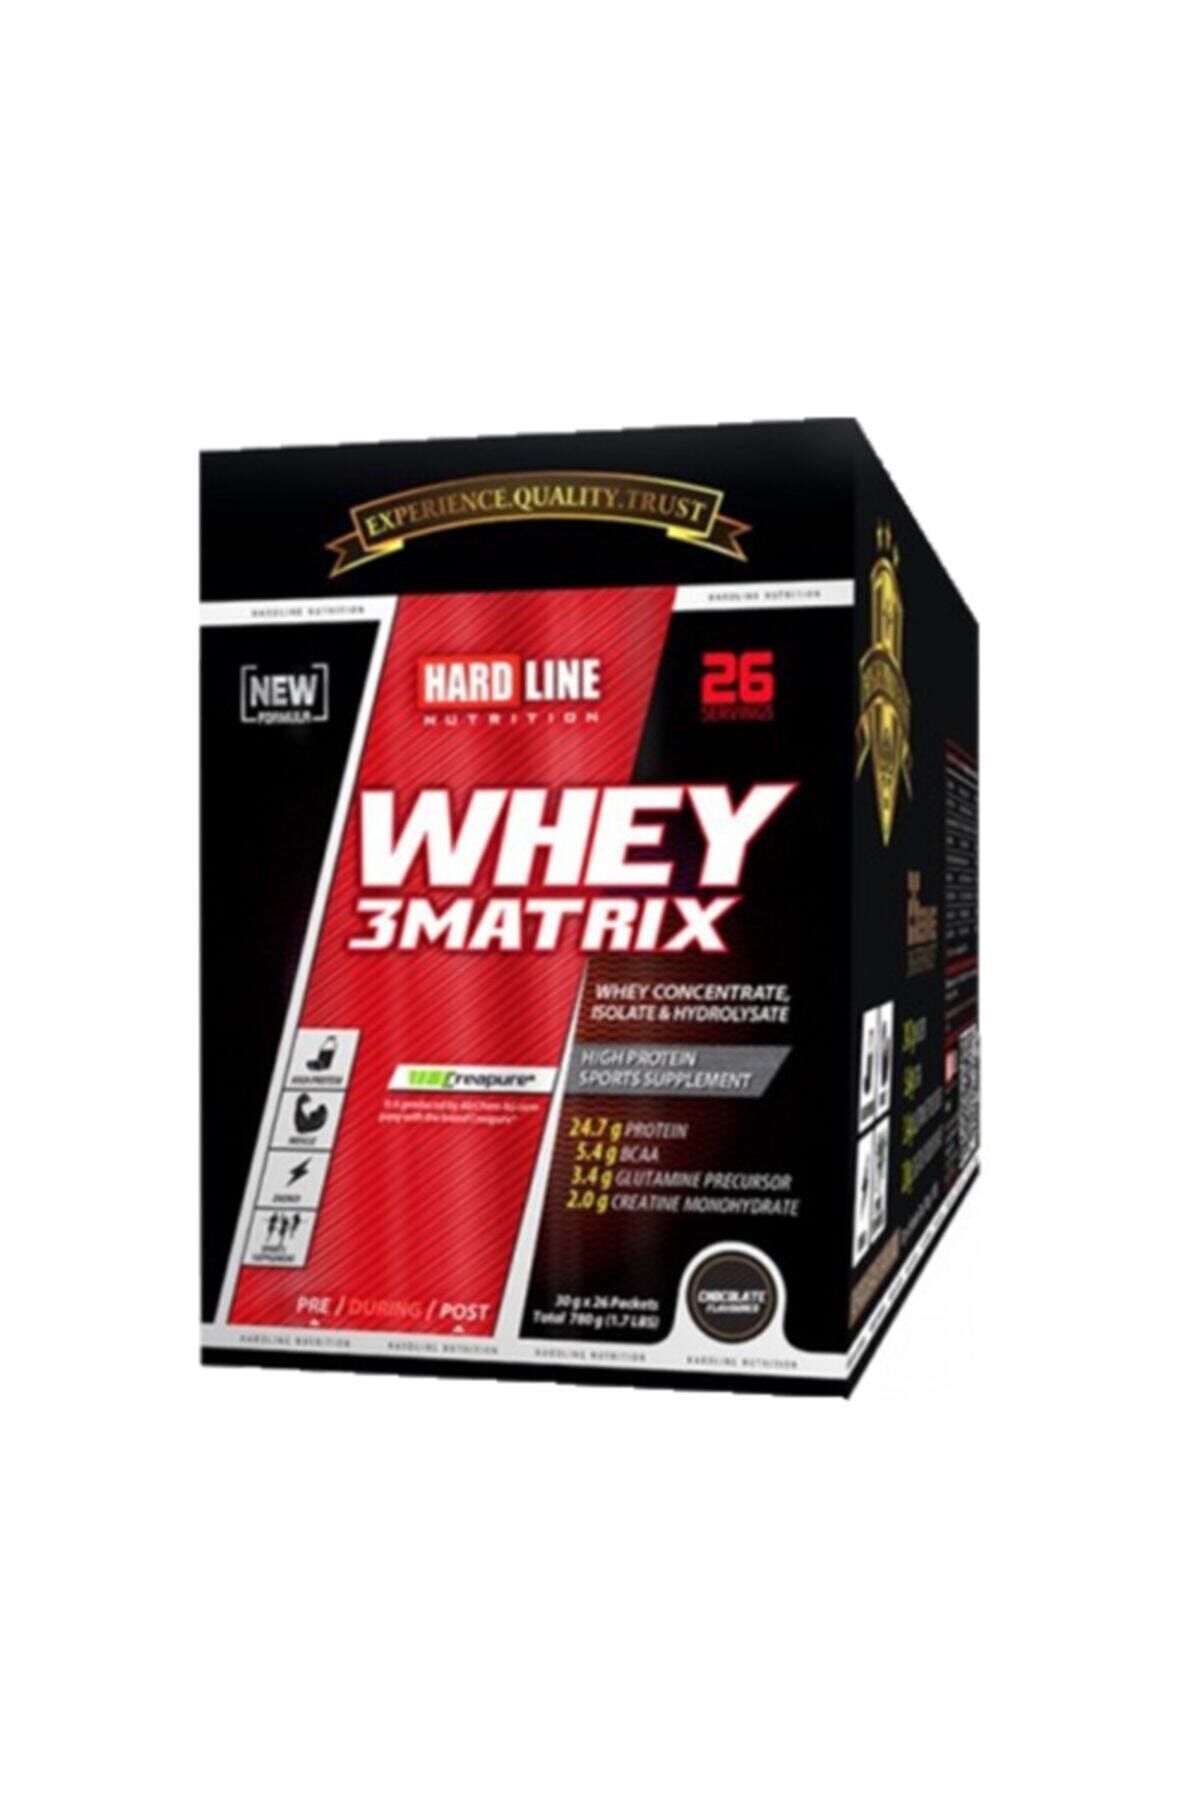 Hardline Whey 3matrix 26 Saşe Çikolata Aromalı Protein Tozu 30 Gr